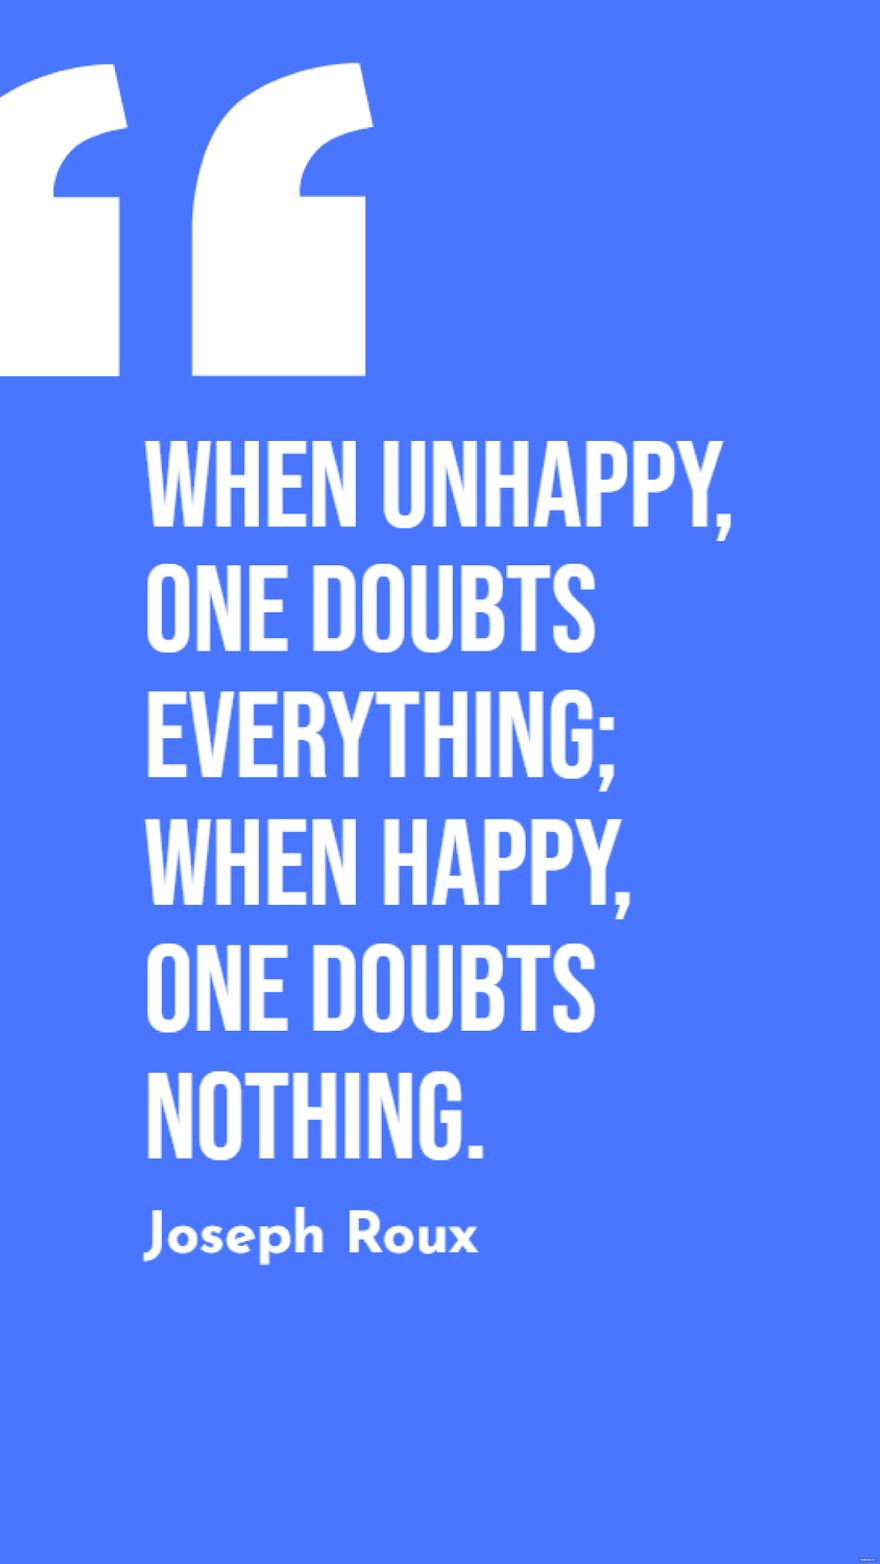 Free Joseph Roux - When unhappy, one doubts everything; when happy, one doubts nothing.